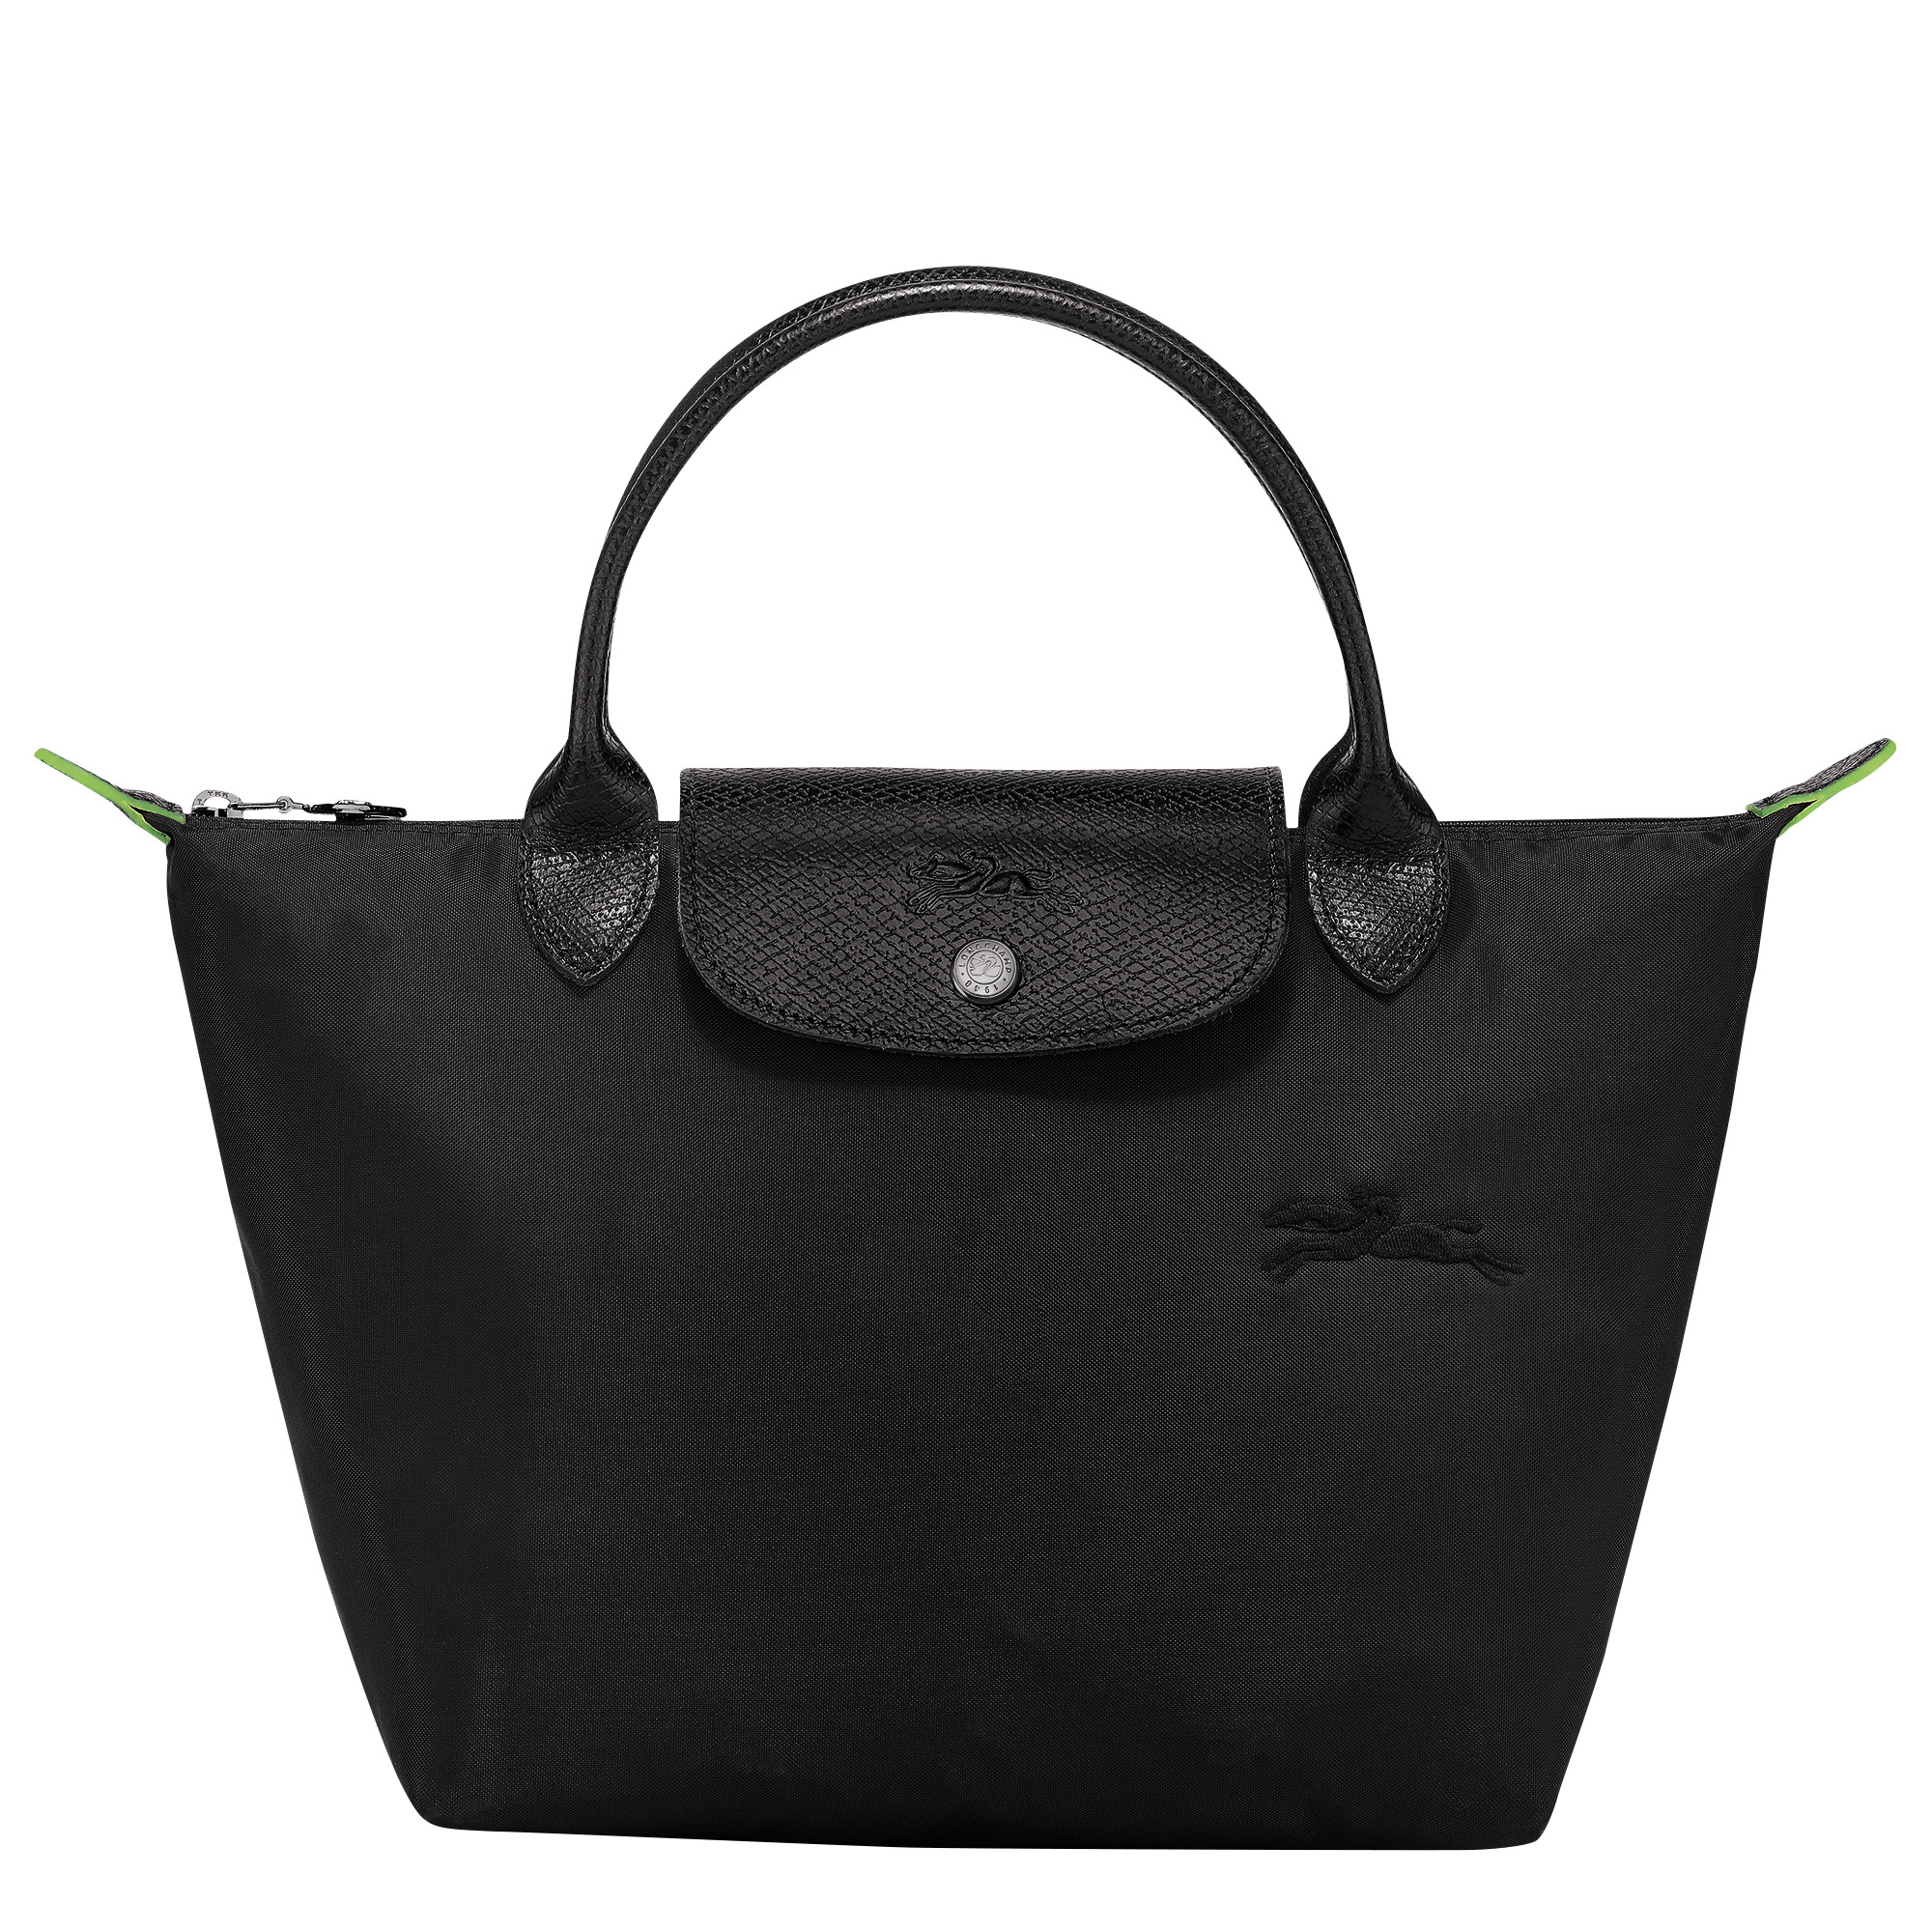 Longchamp Le Pliage Green S Handbag Black - Recycled canvas